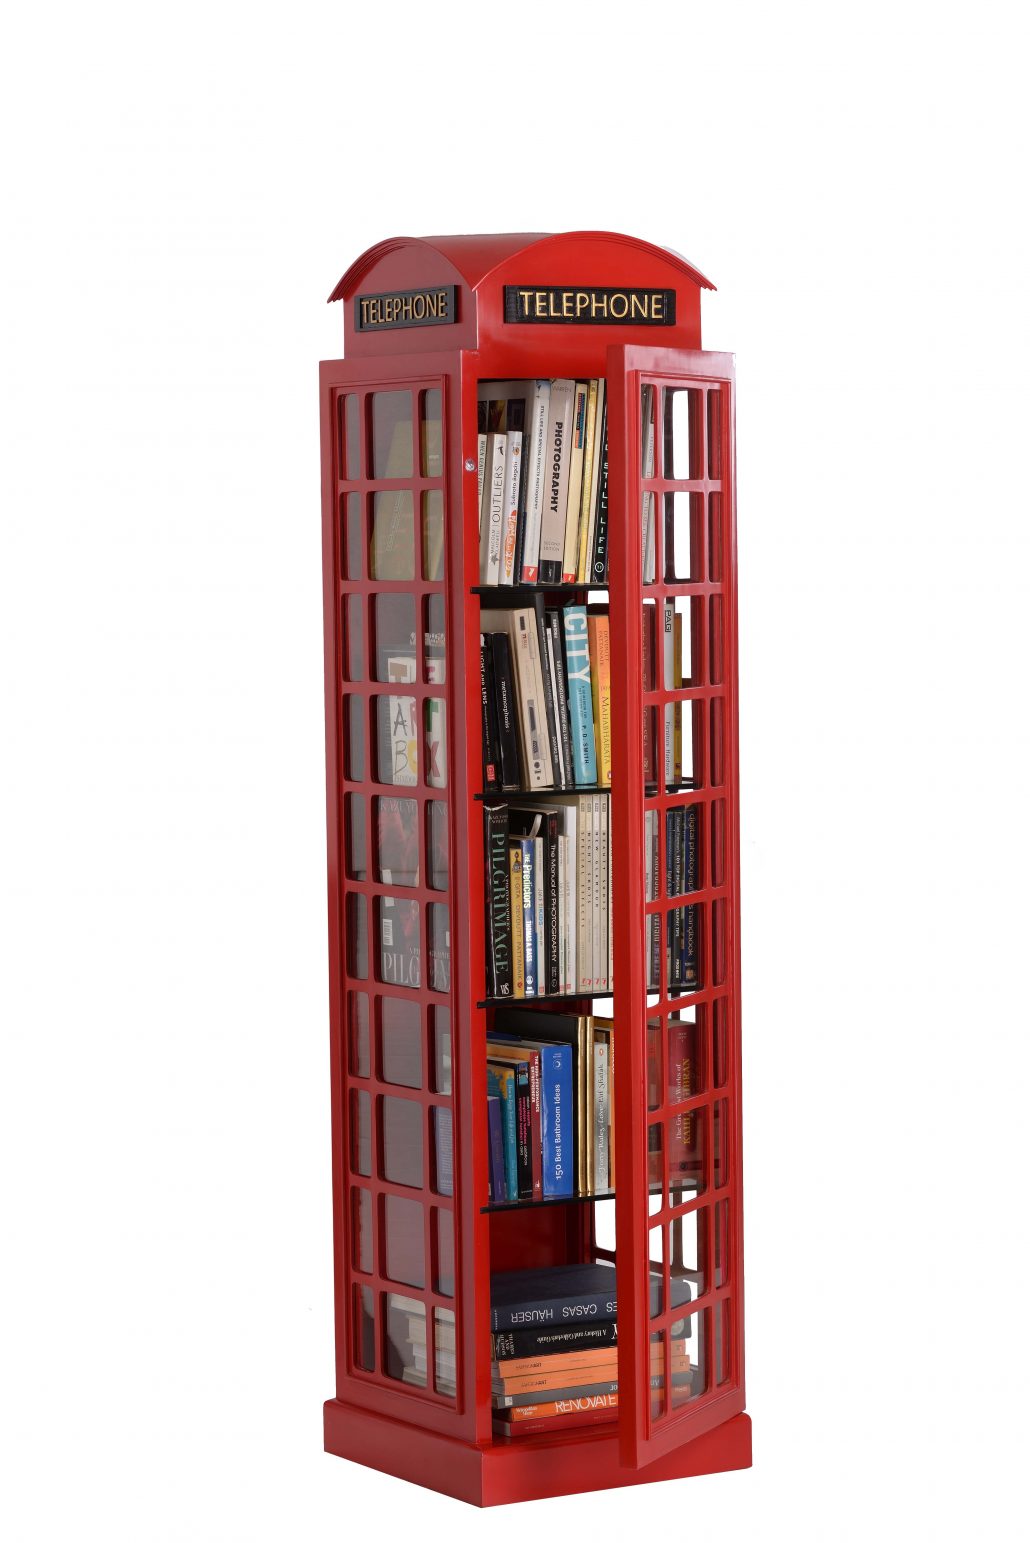 Telephone Booth bookshelf